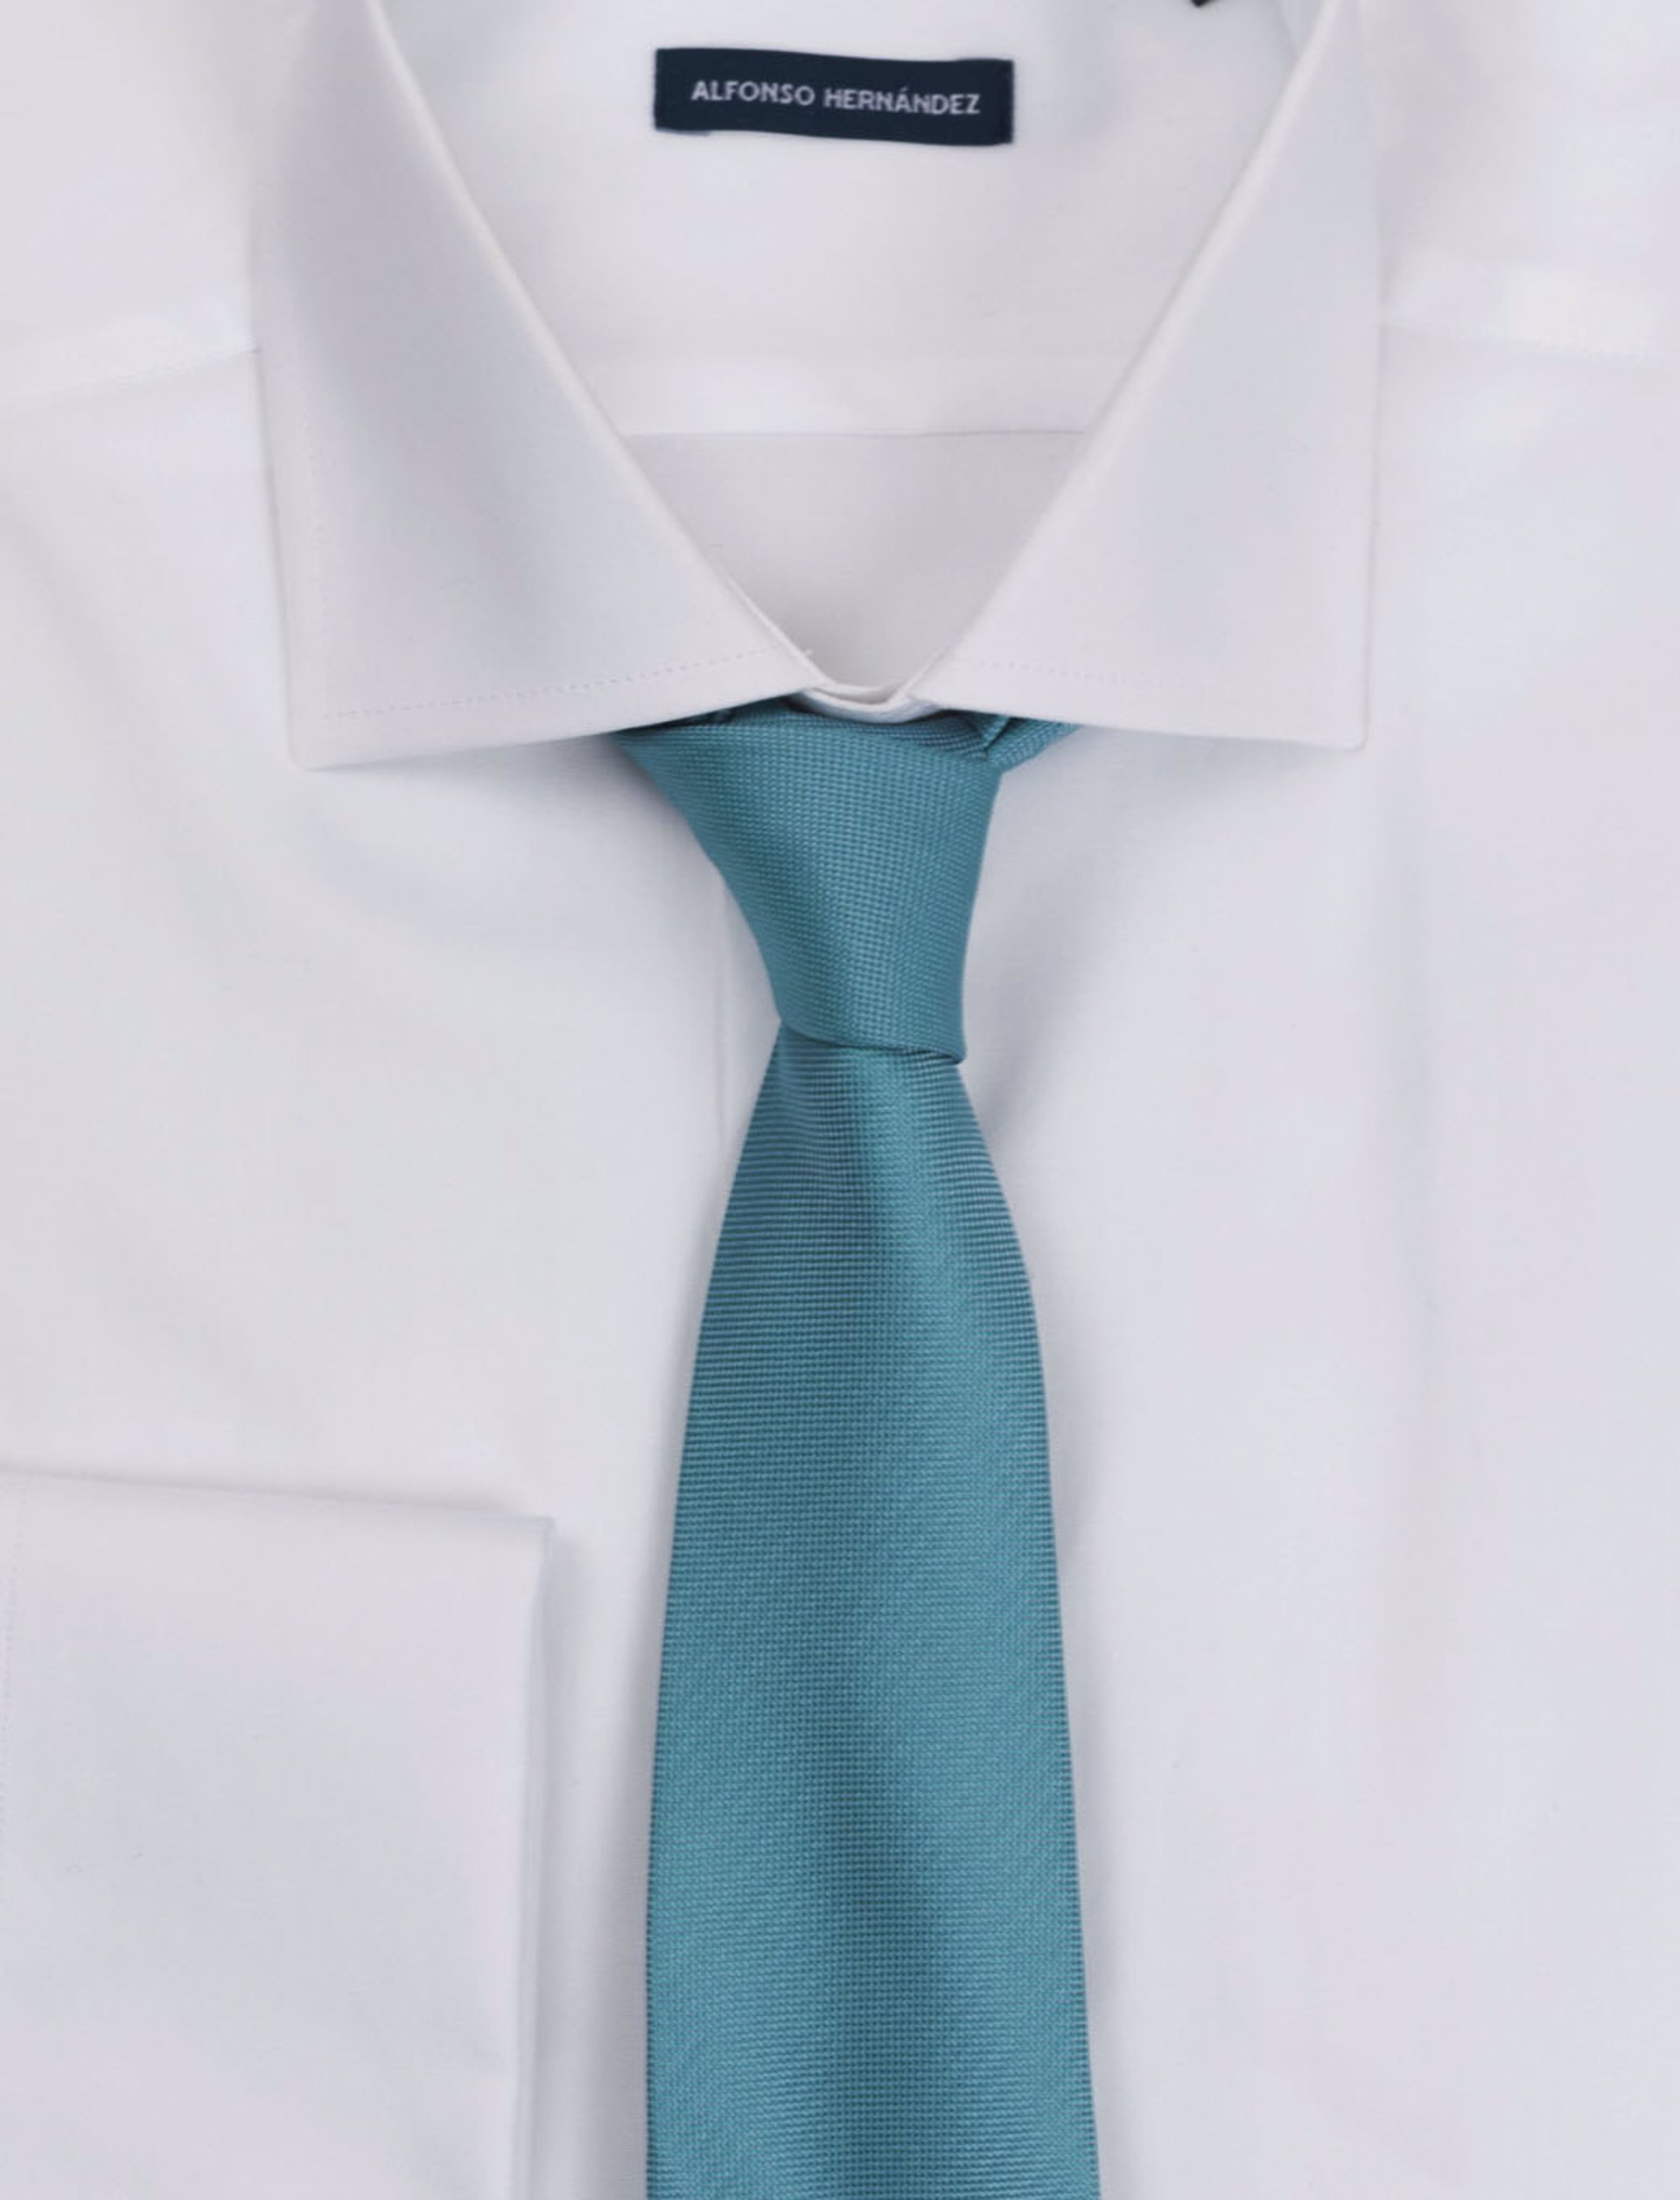 Nudo corbata doble